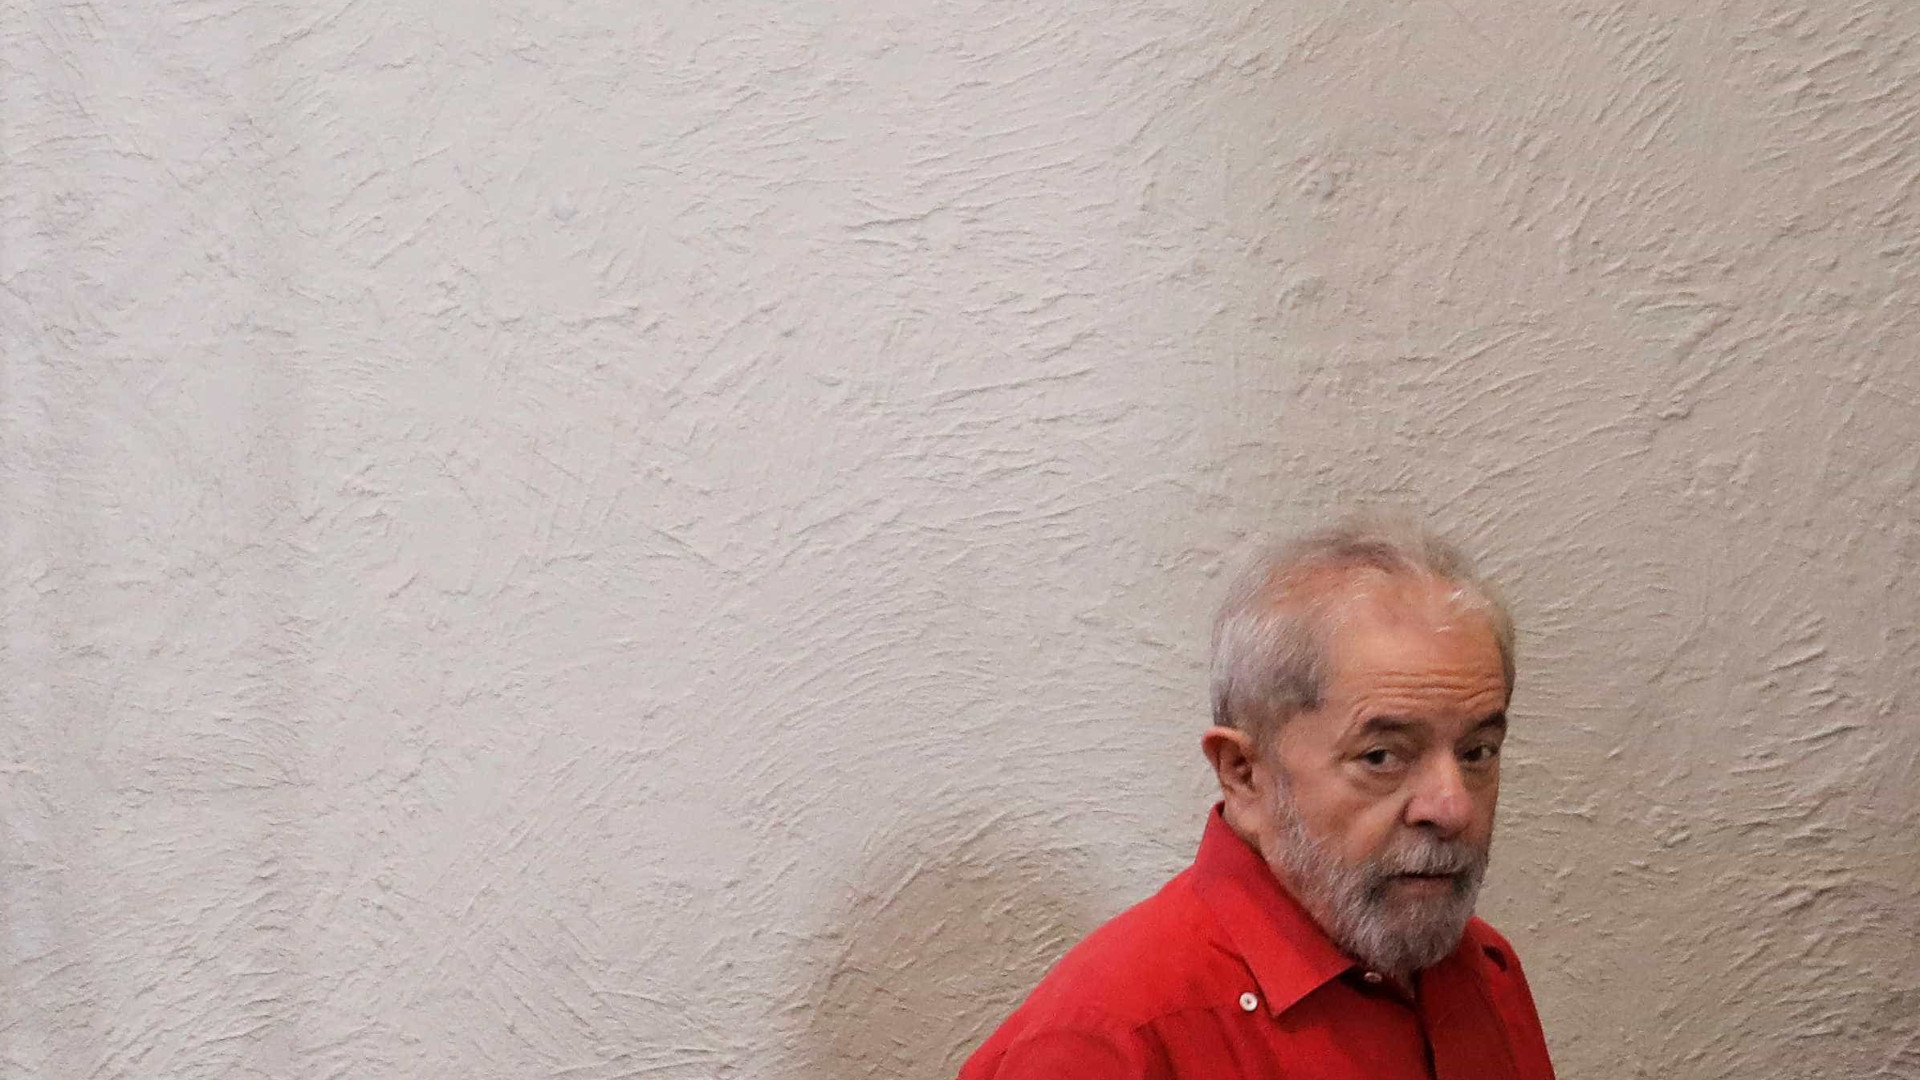 PT acredita que Supremo permitirá
candidatura de Lula em 2018